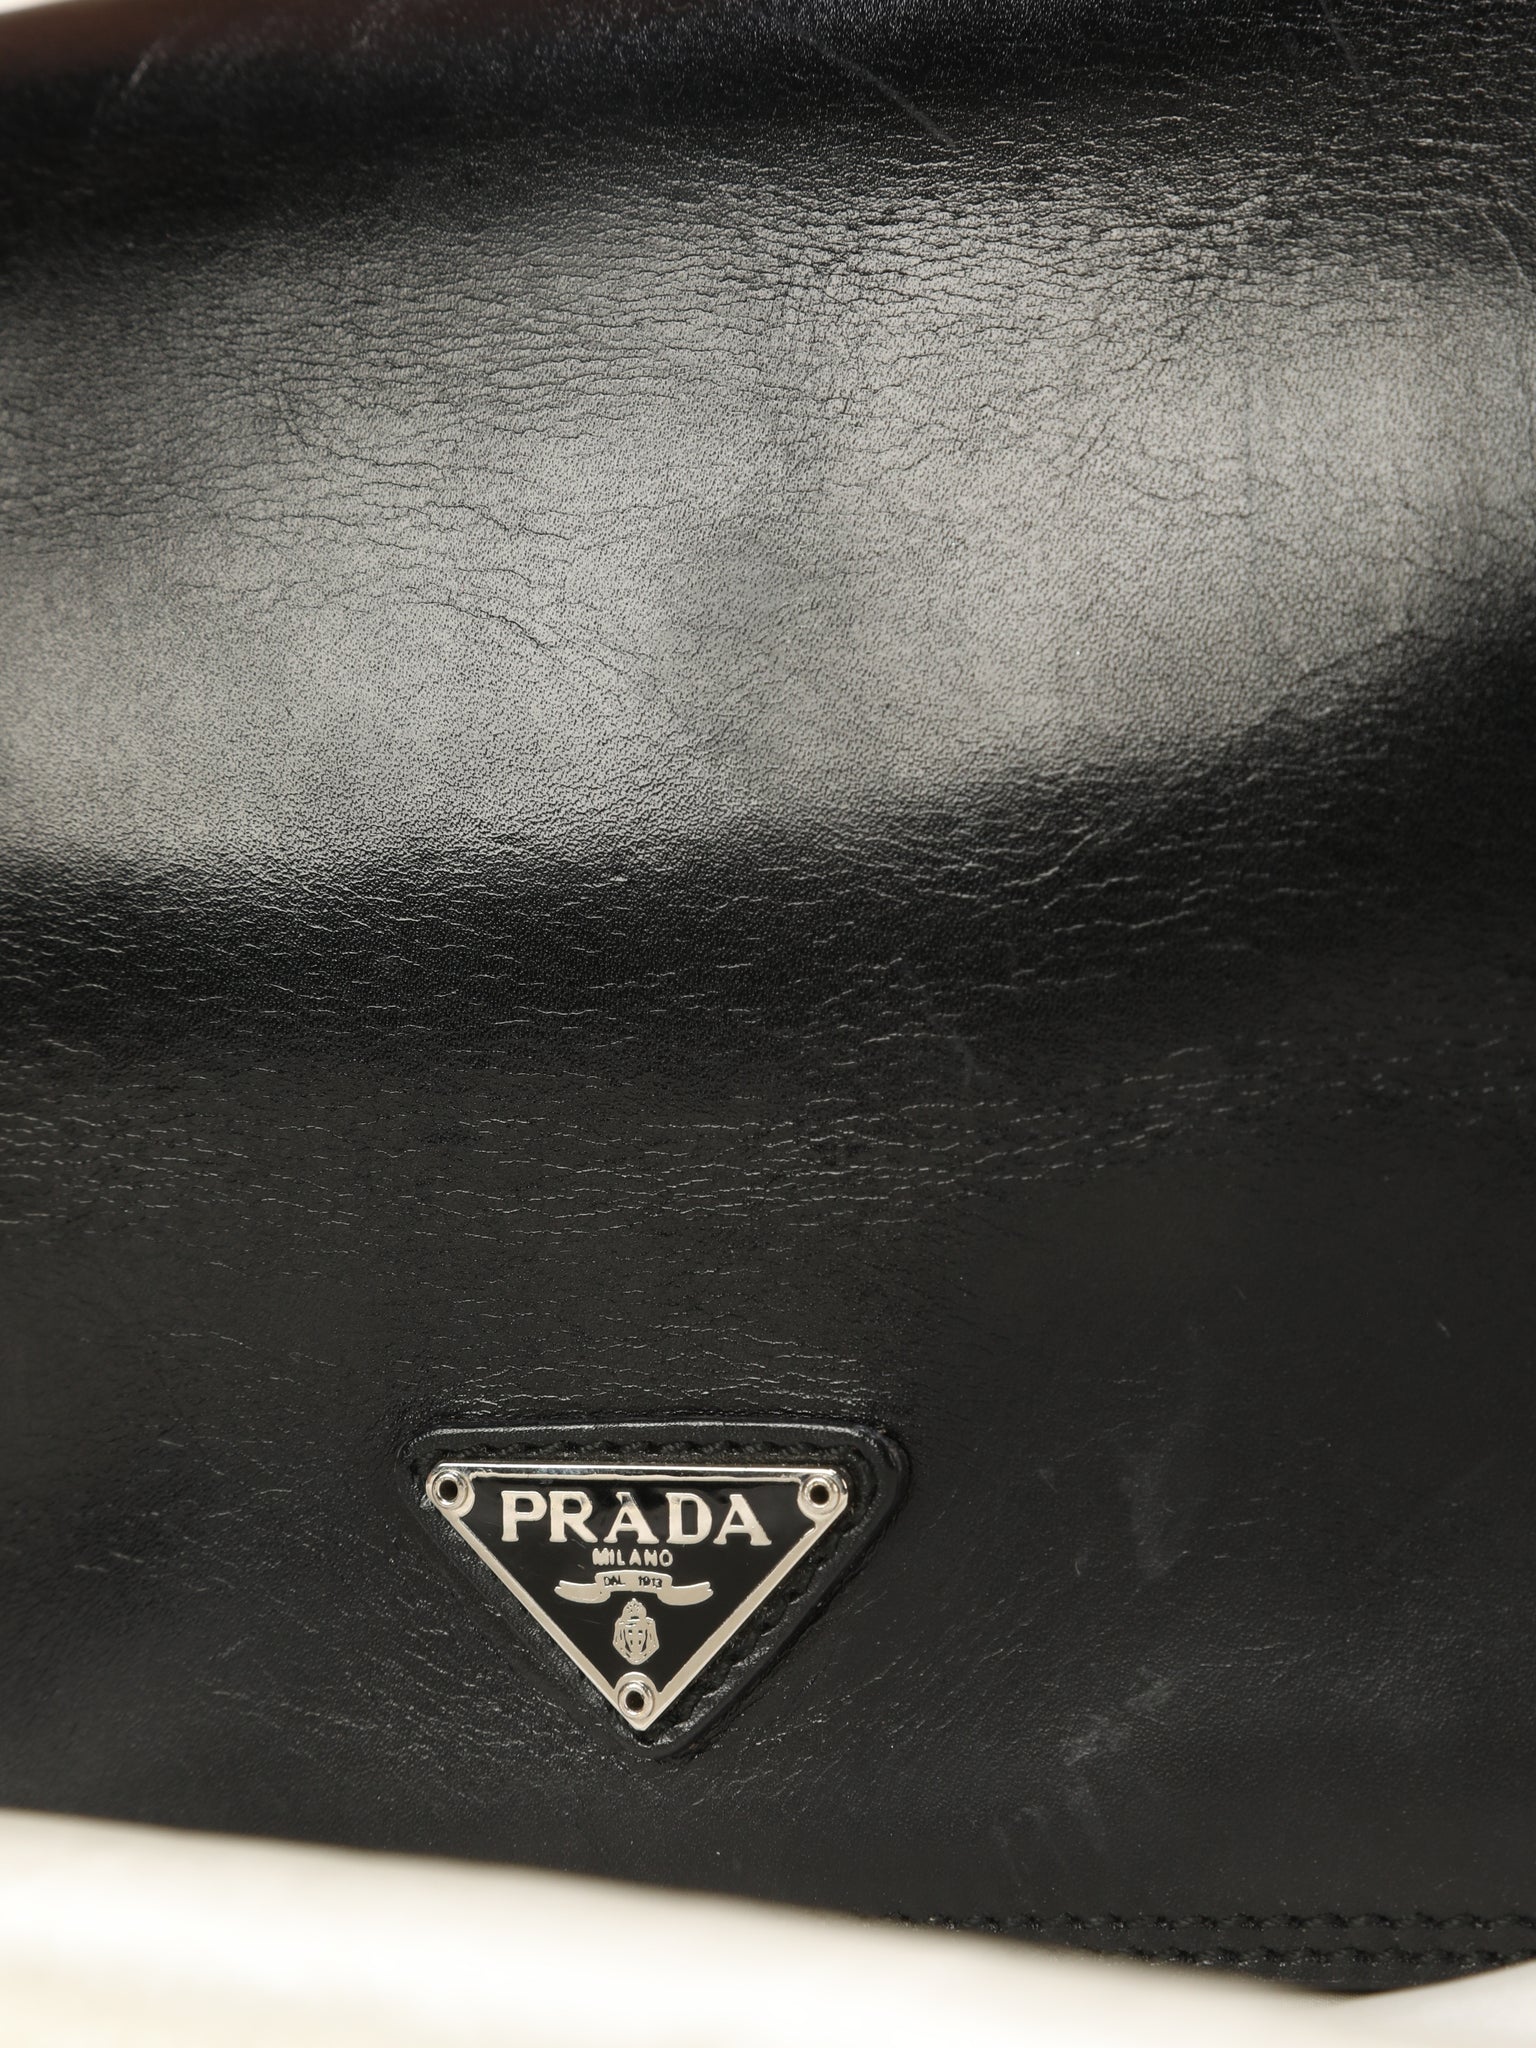 Prada Leather Baguette